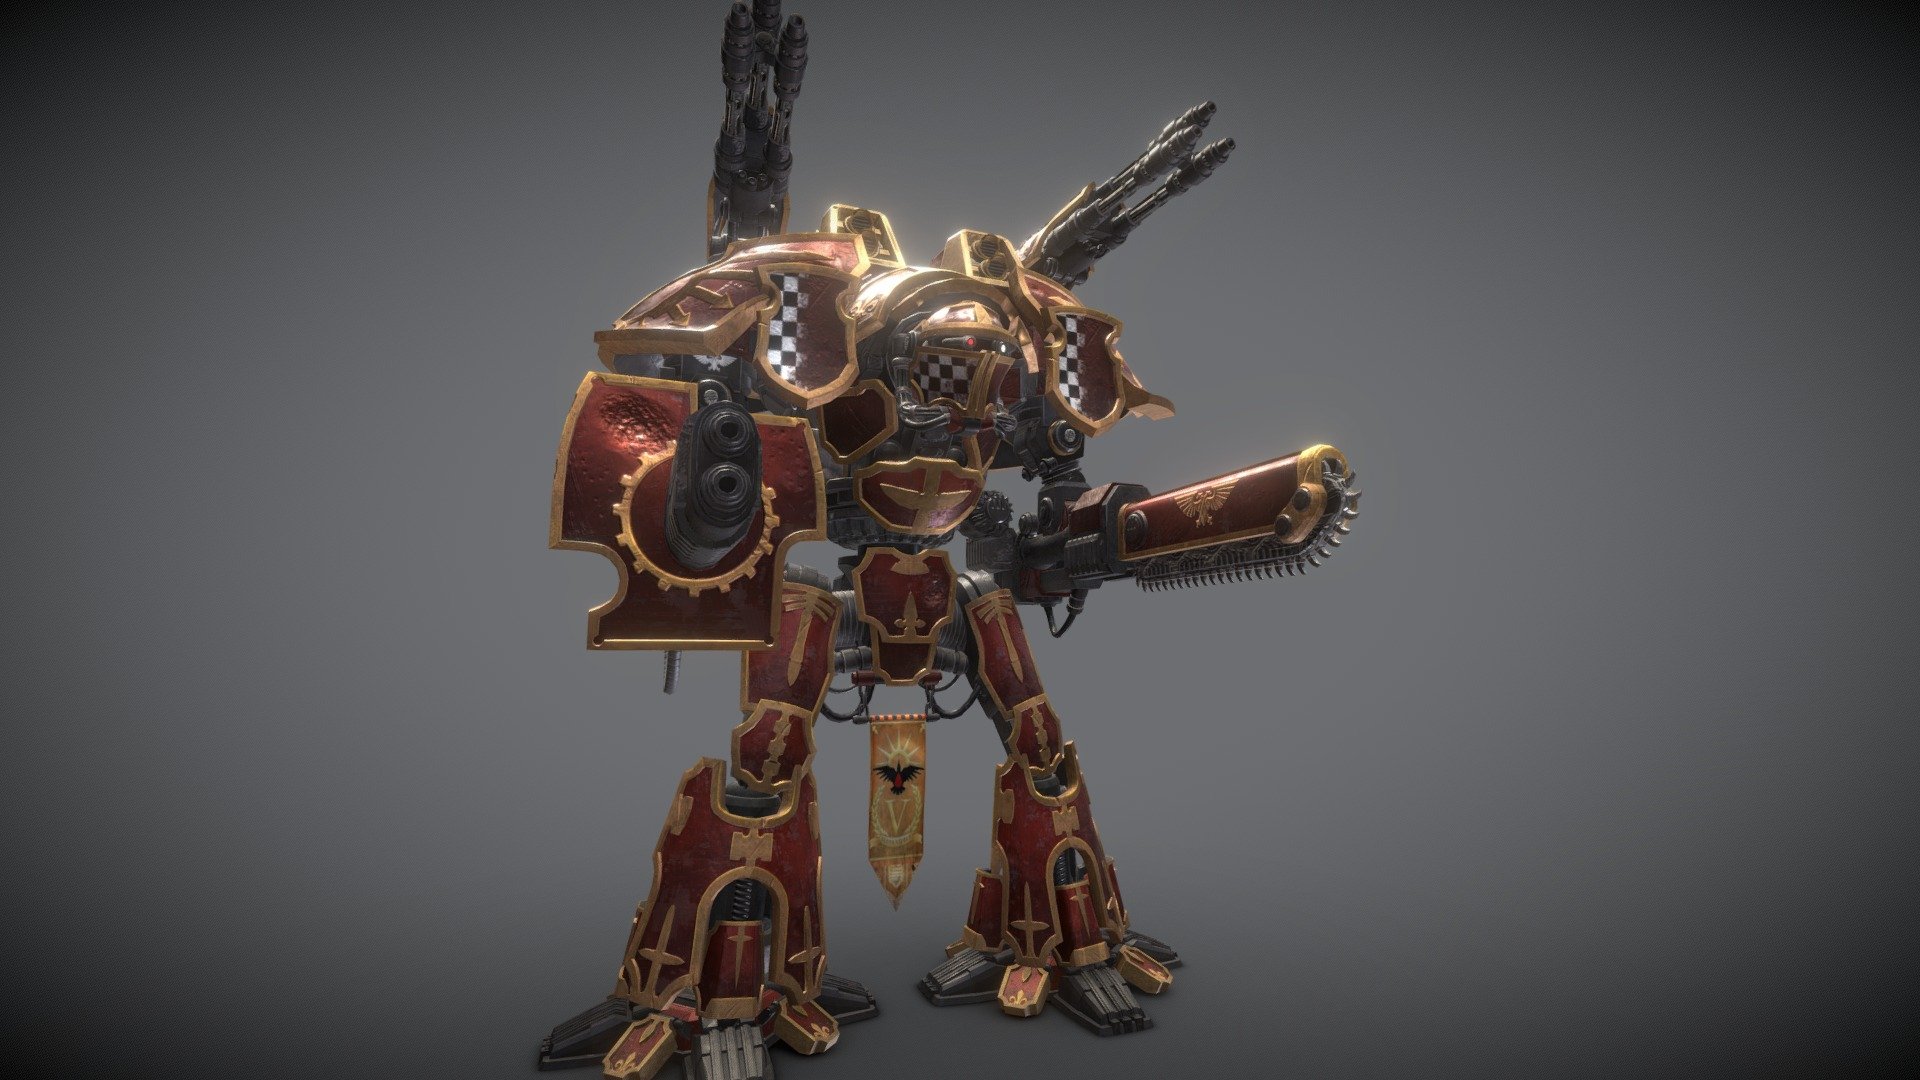 warhammer 40k warlord titan Minecraft Map